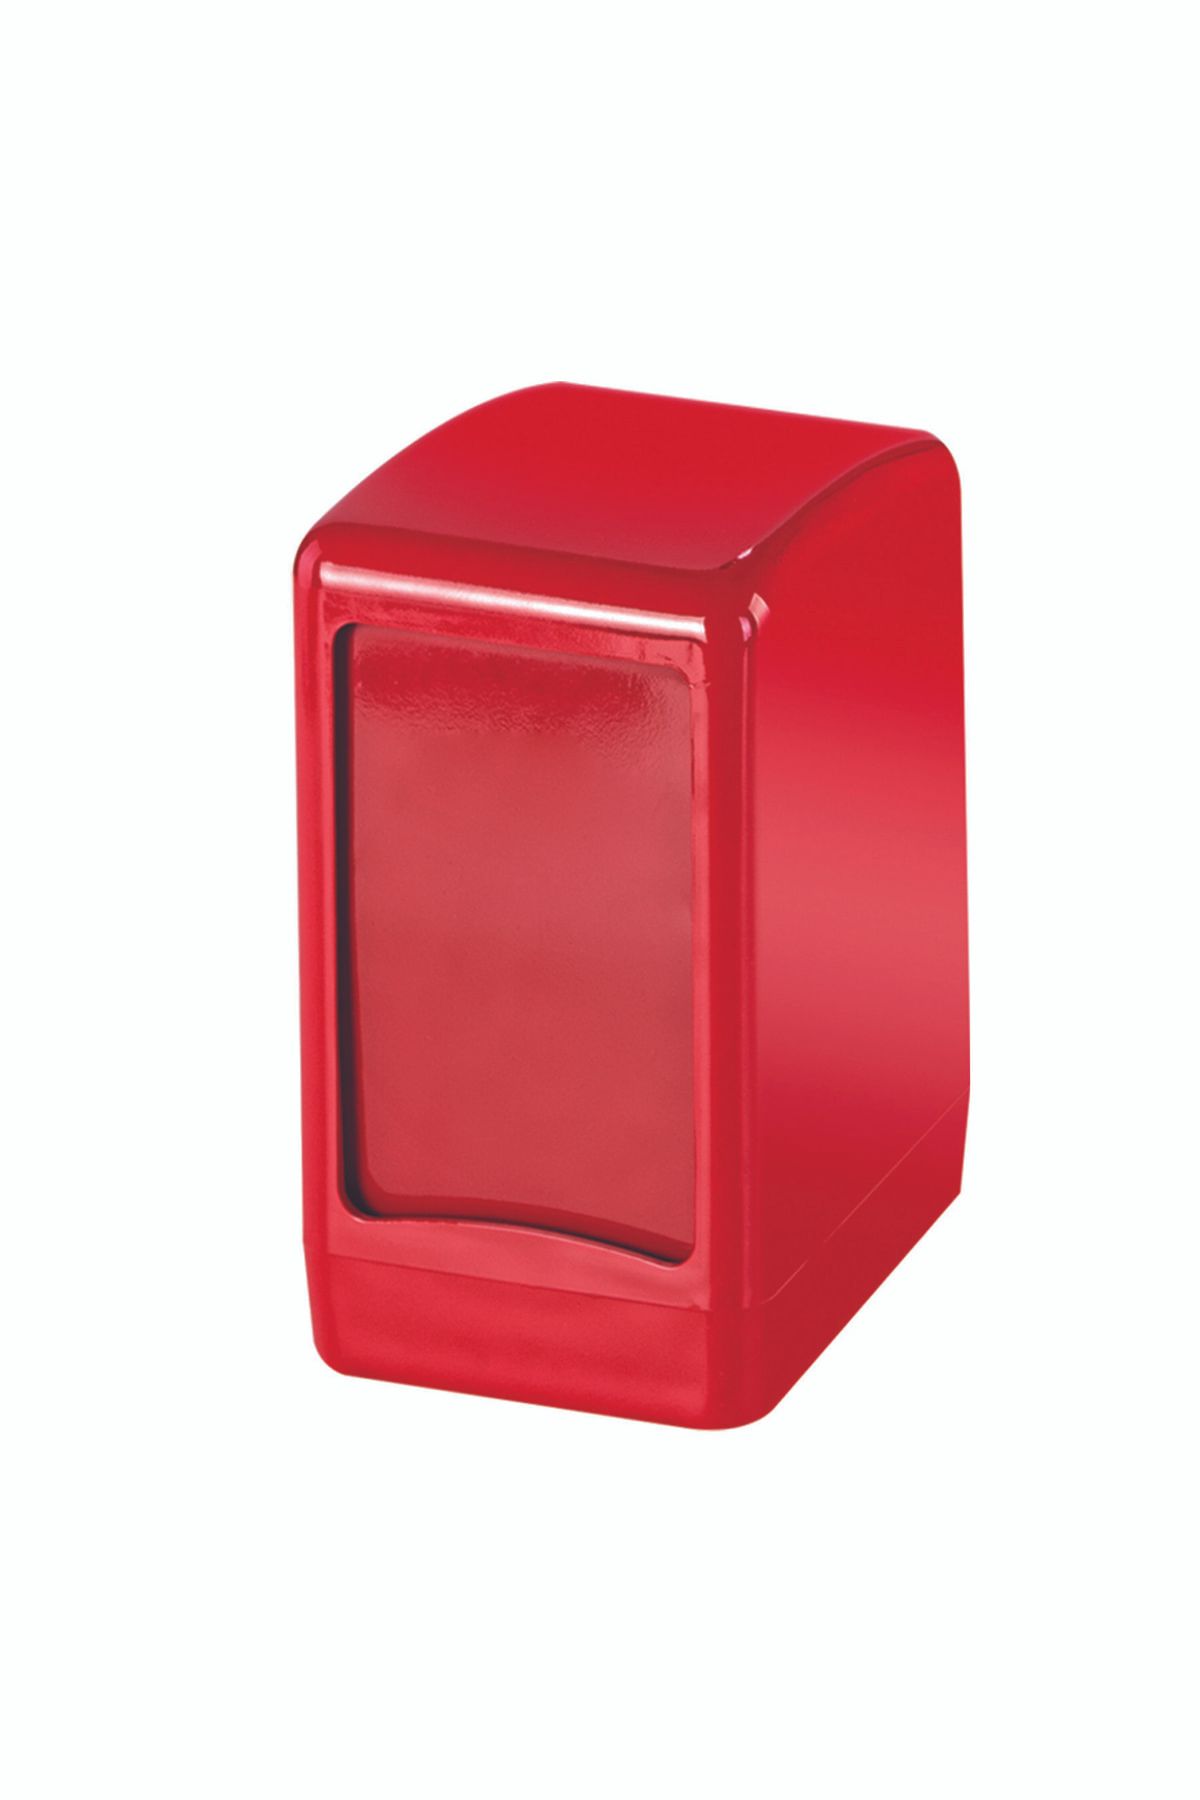 Palex (ün-ev) Masa Üstü Peçetelik (masa Üstü Peçete Dispenseri) (hafif) Kırmızı 3474-h-b